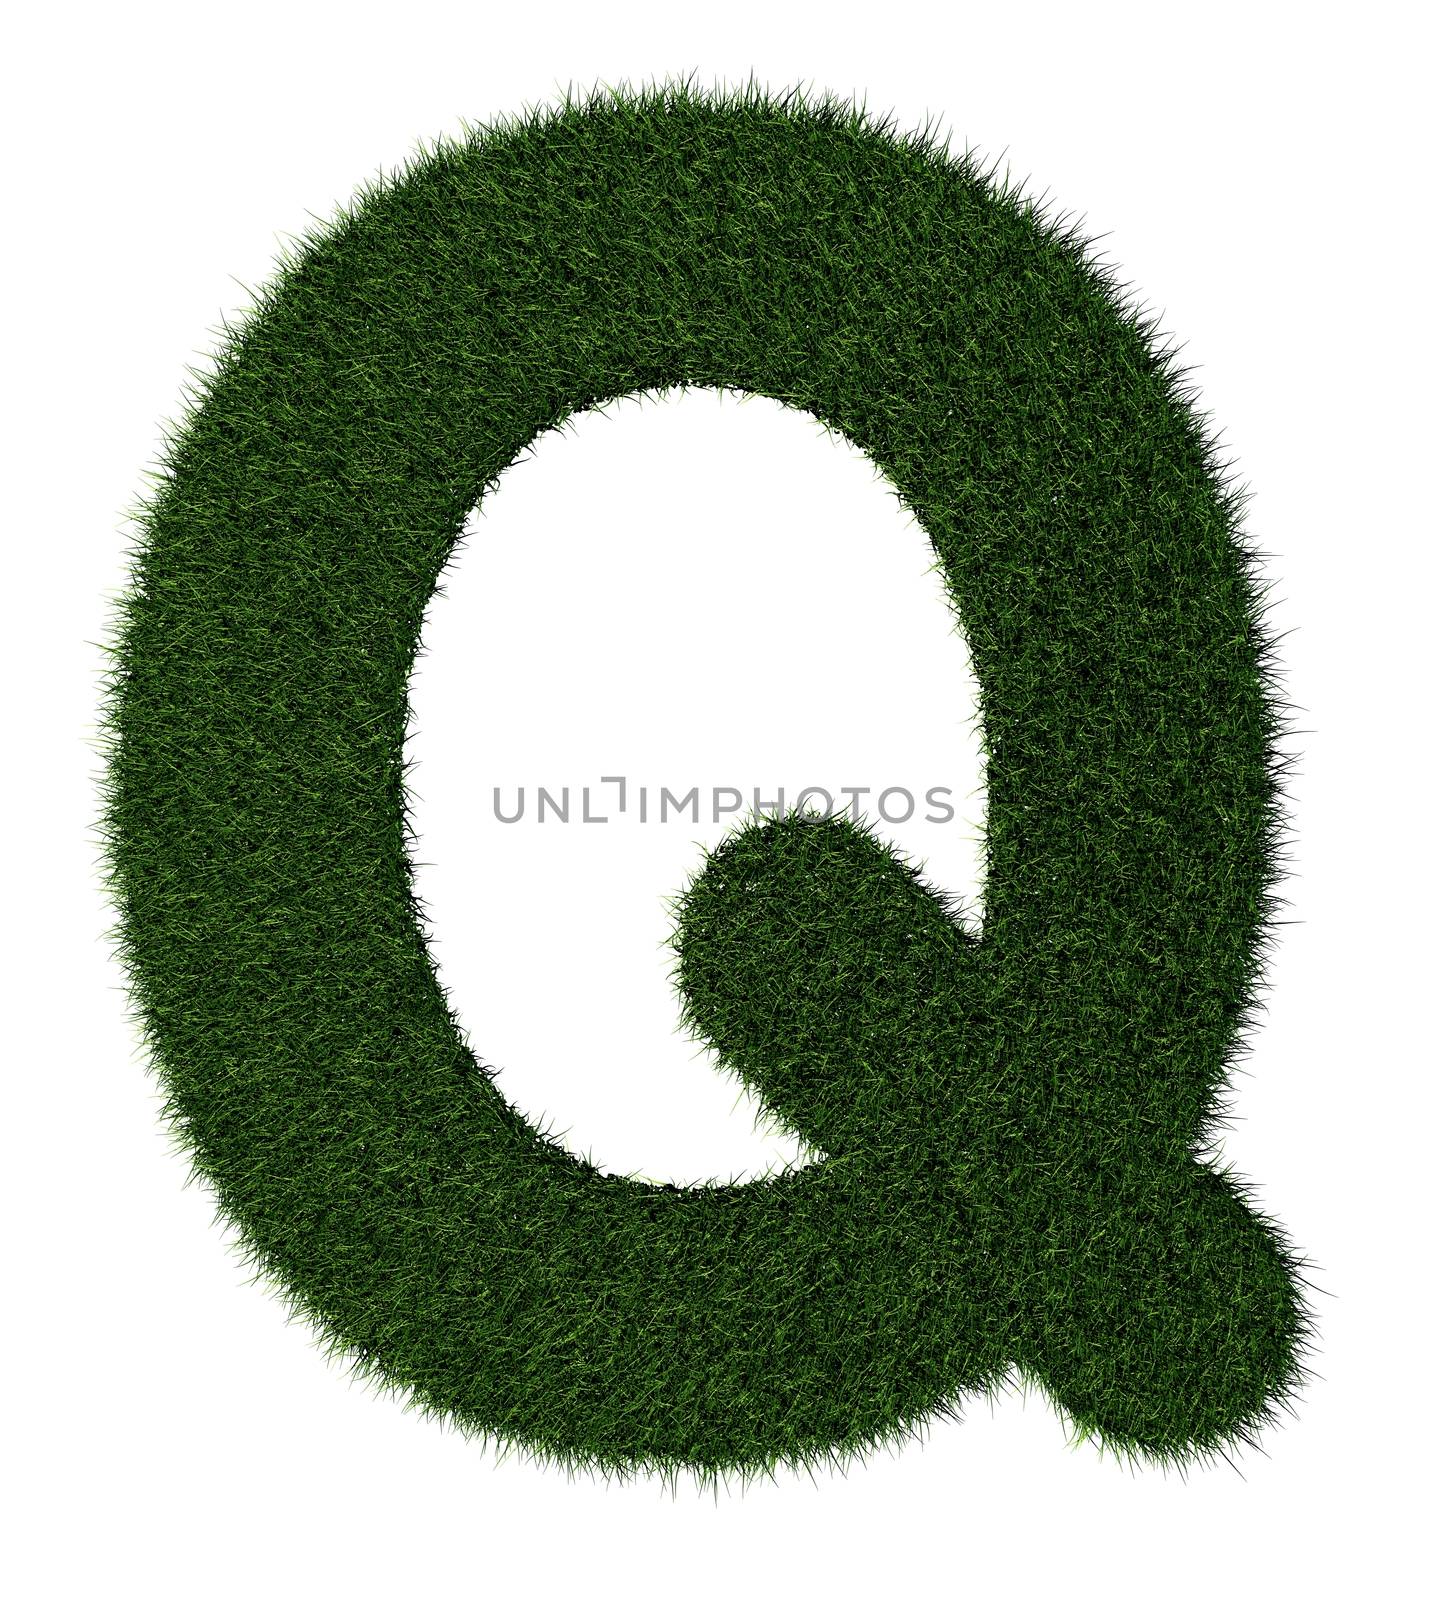 Grass alphabet - Q by midani